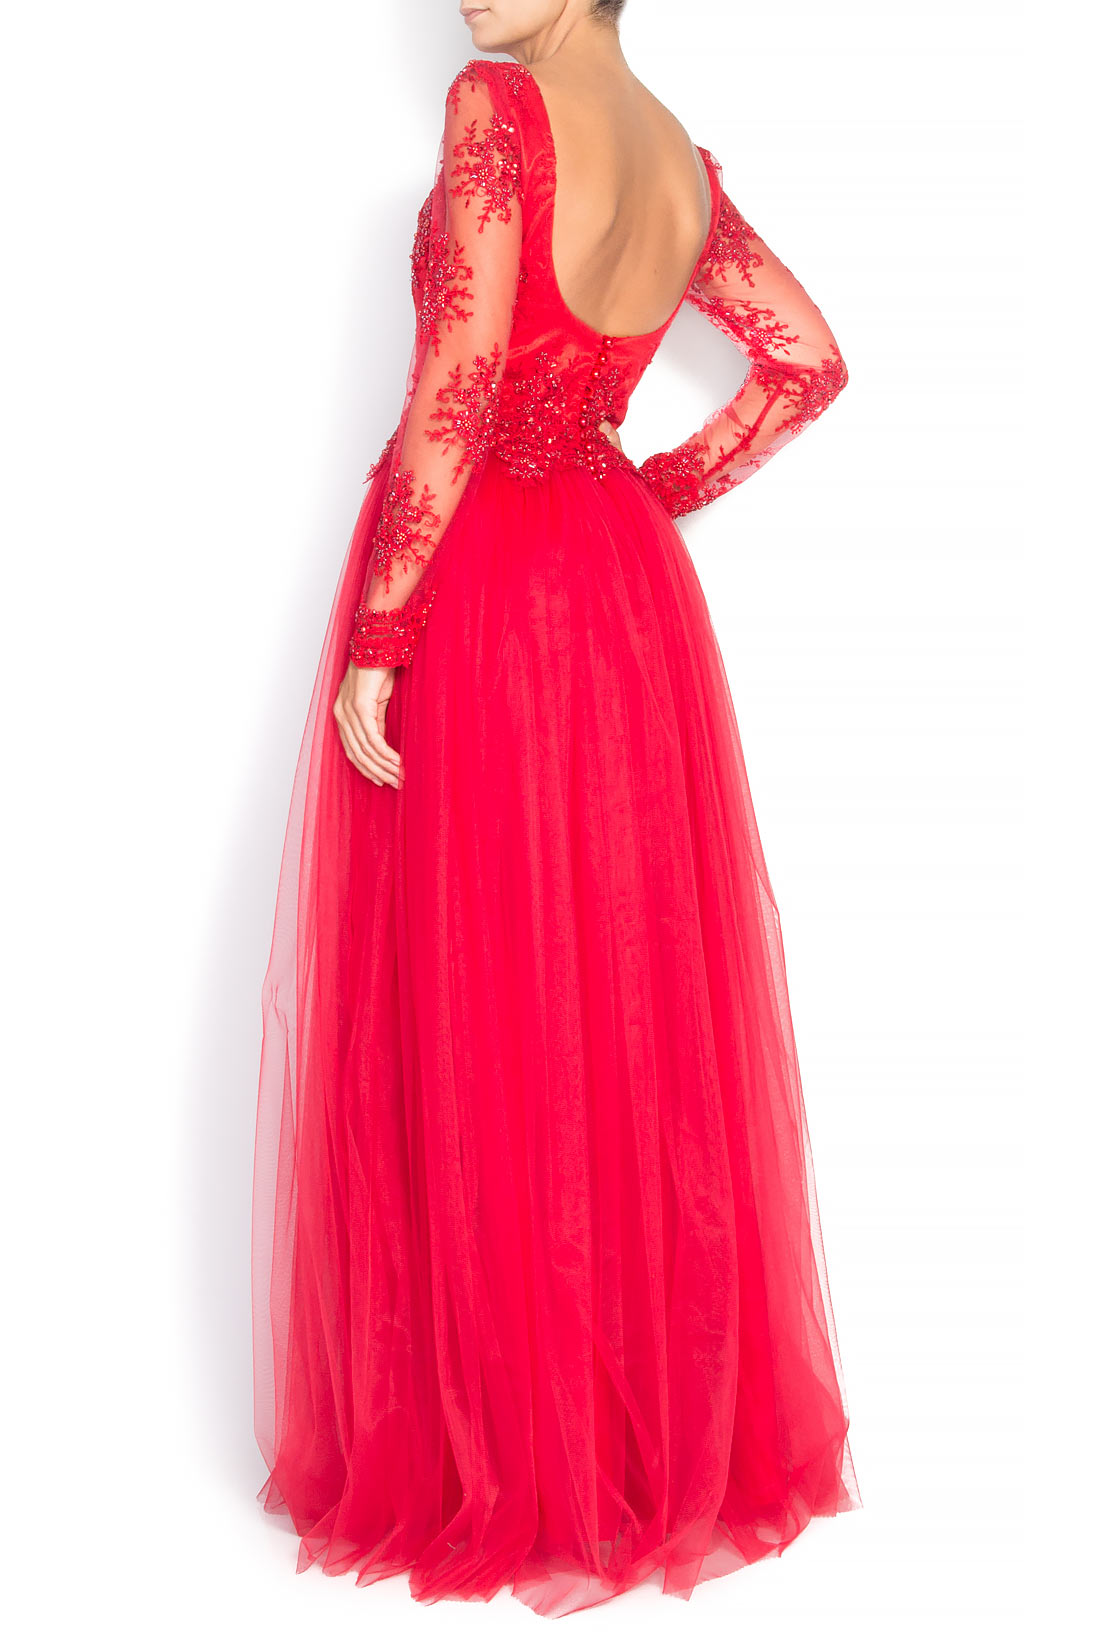 'Ruby Red' tulle and lace maxi dress Raffaela Moraru image 2